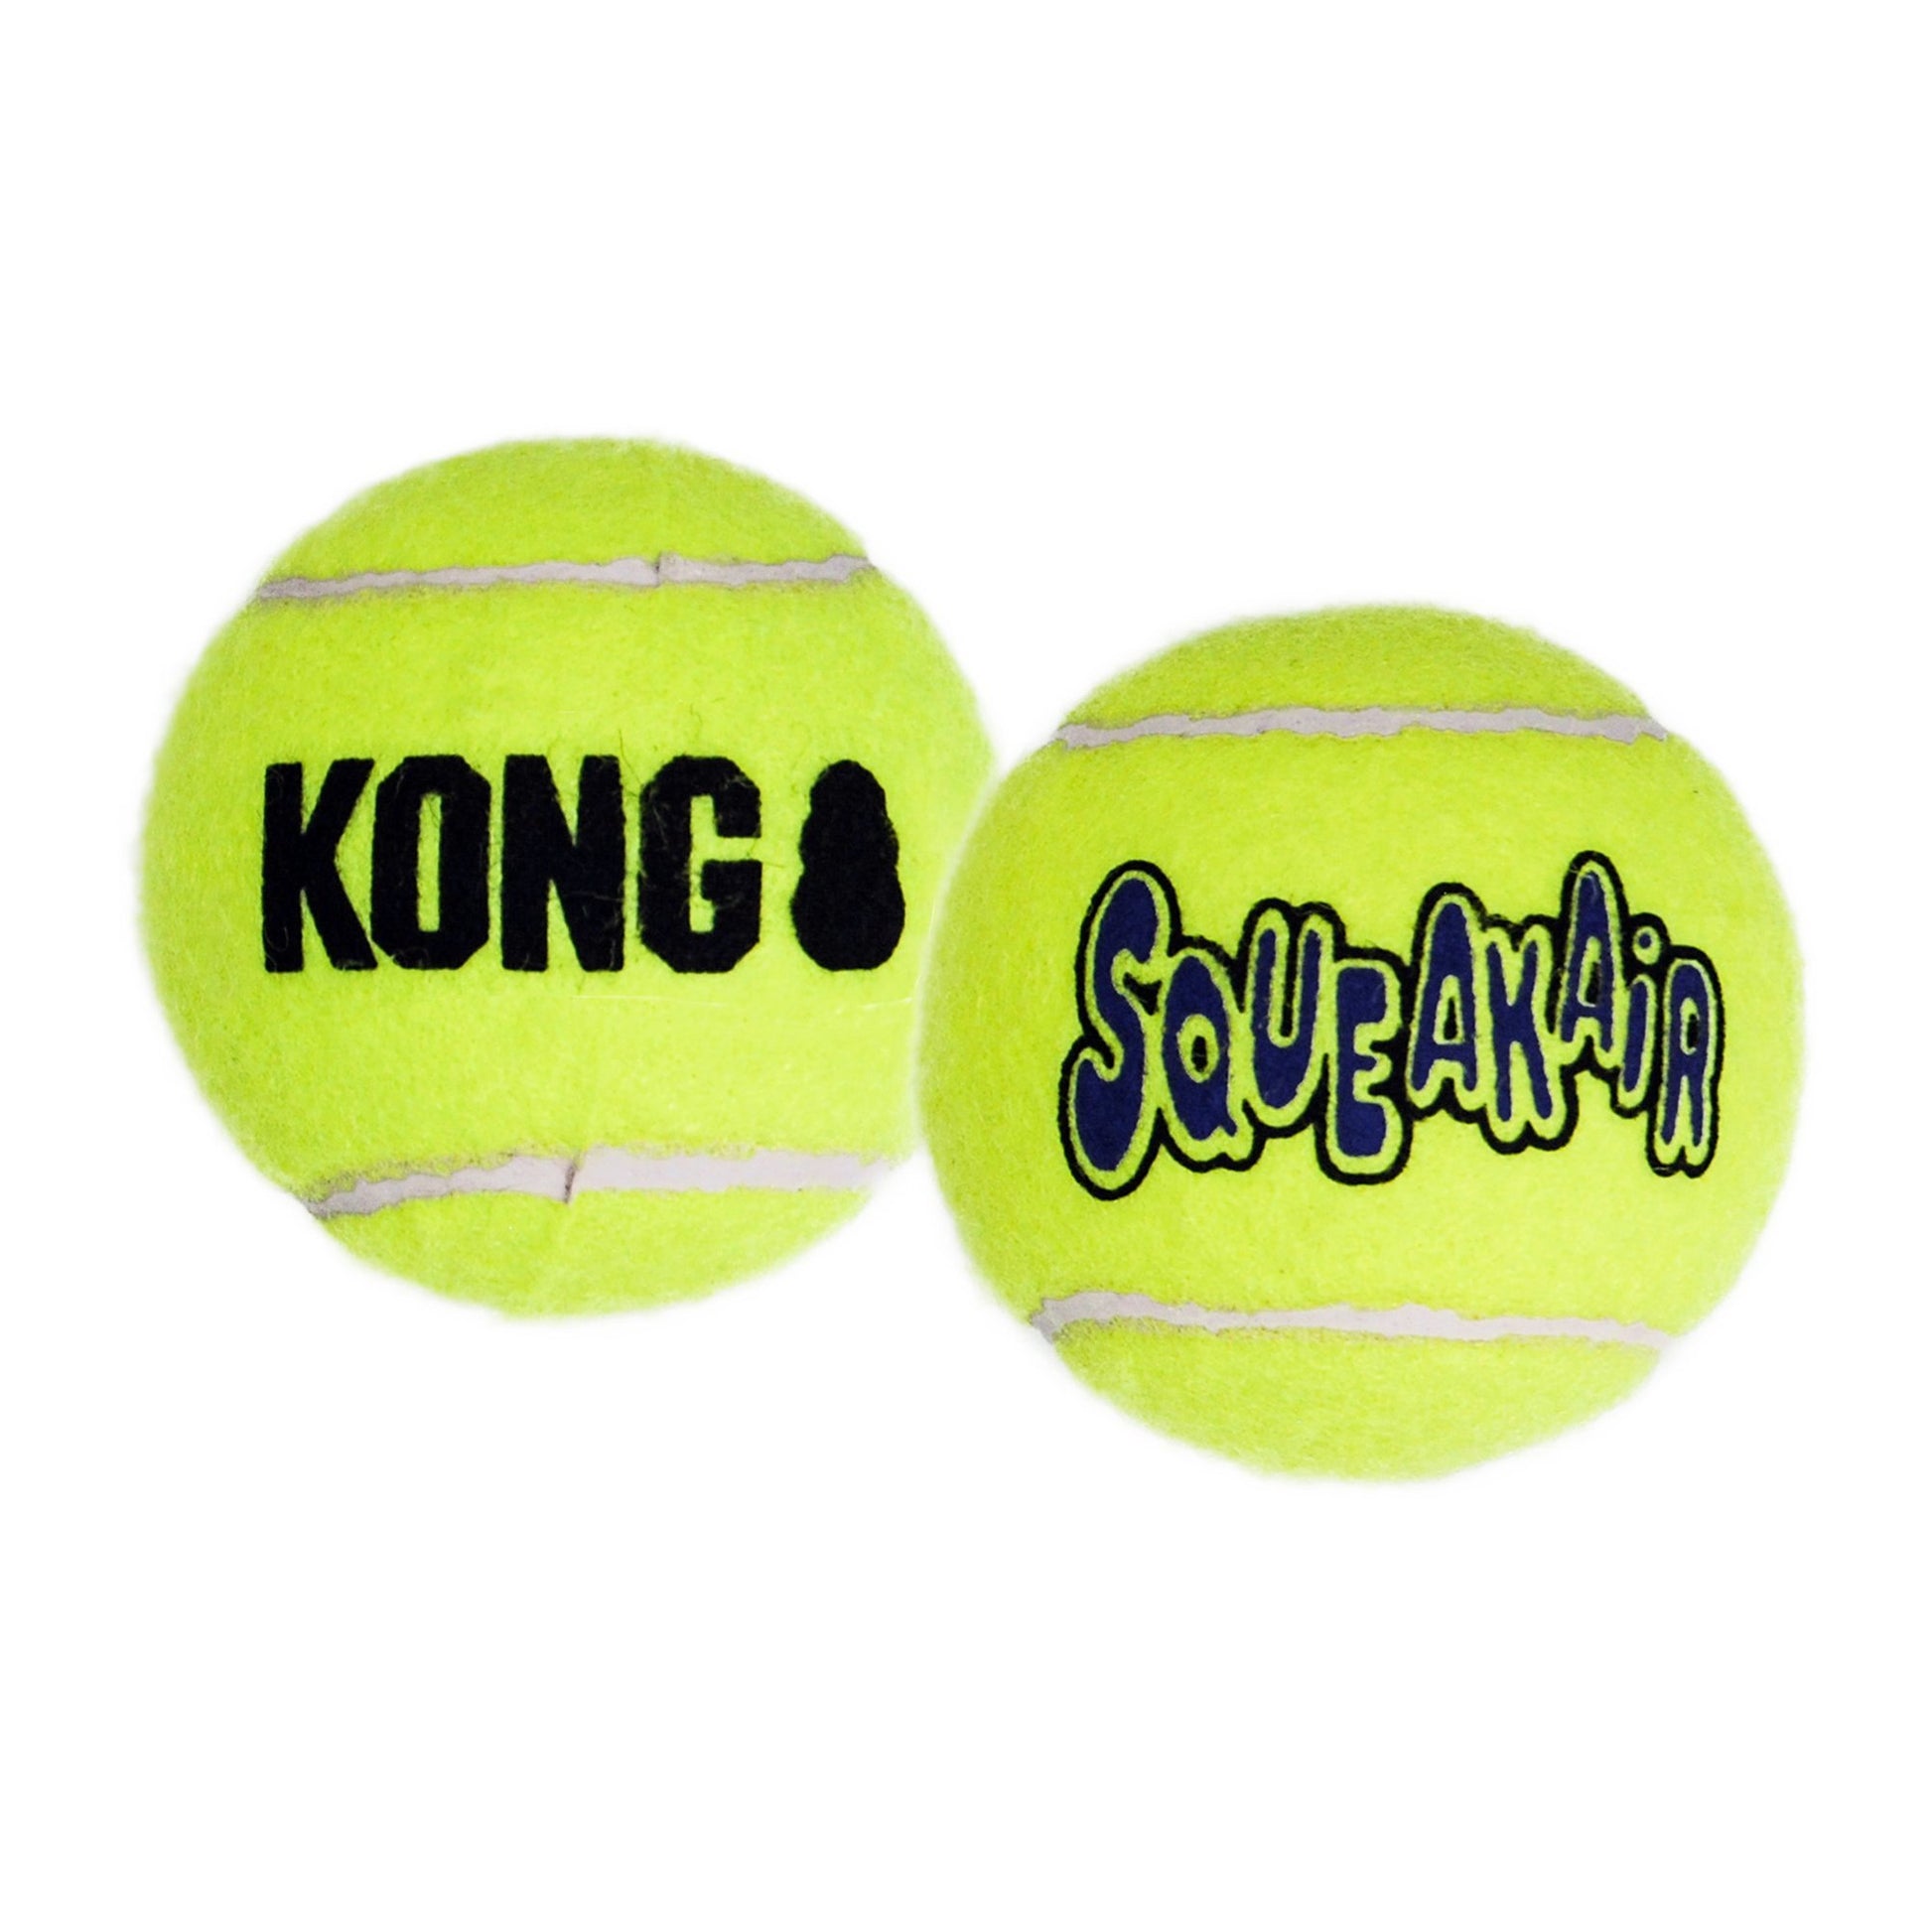 Kong AIRDOG Yellow SQUEAKAIR Tennis Ball - Ball